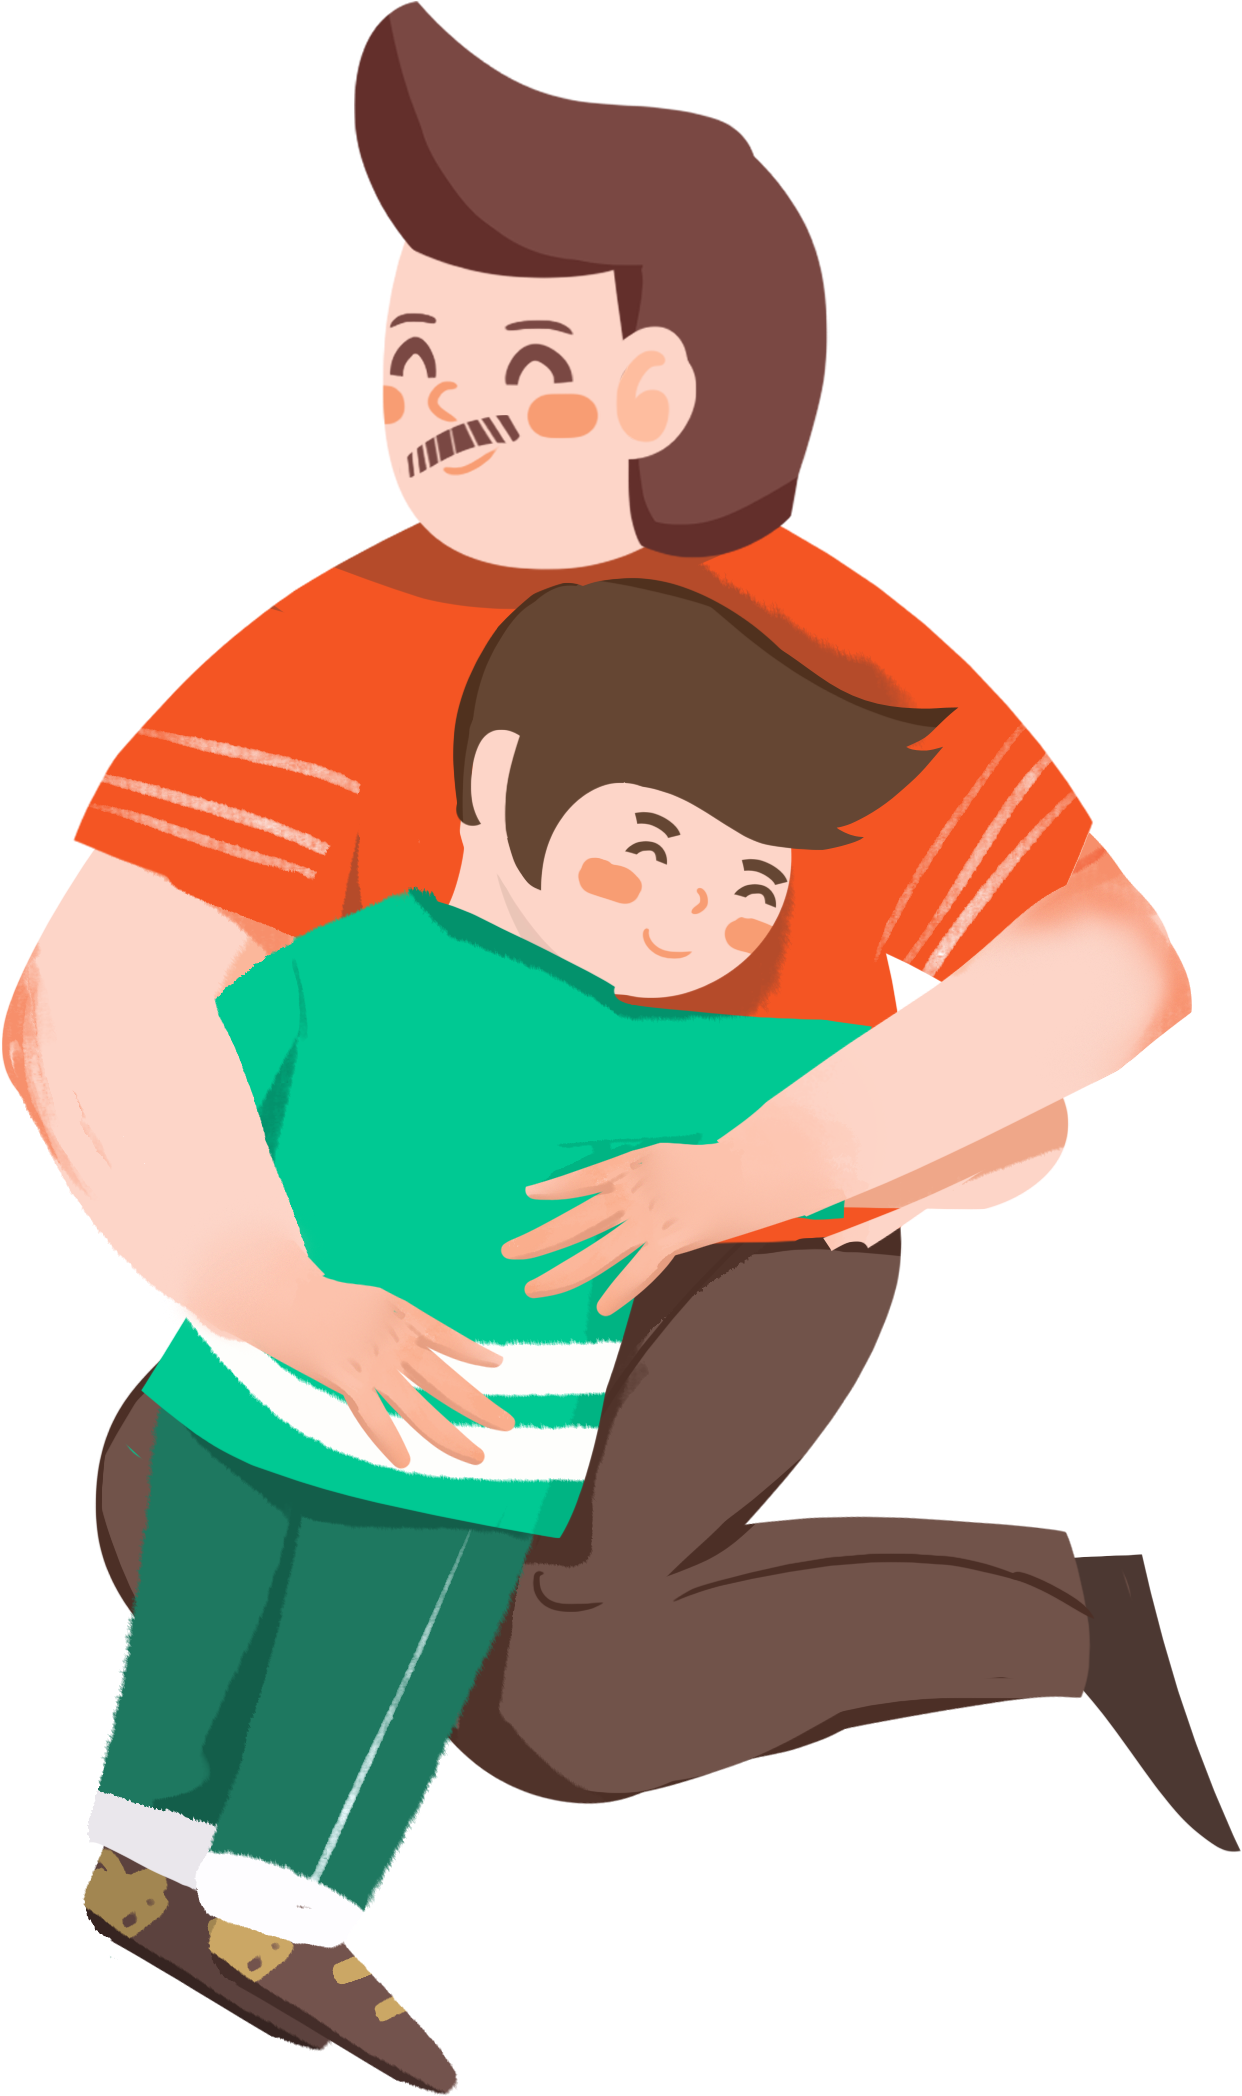 A Man Holding A Boy